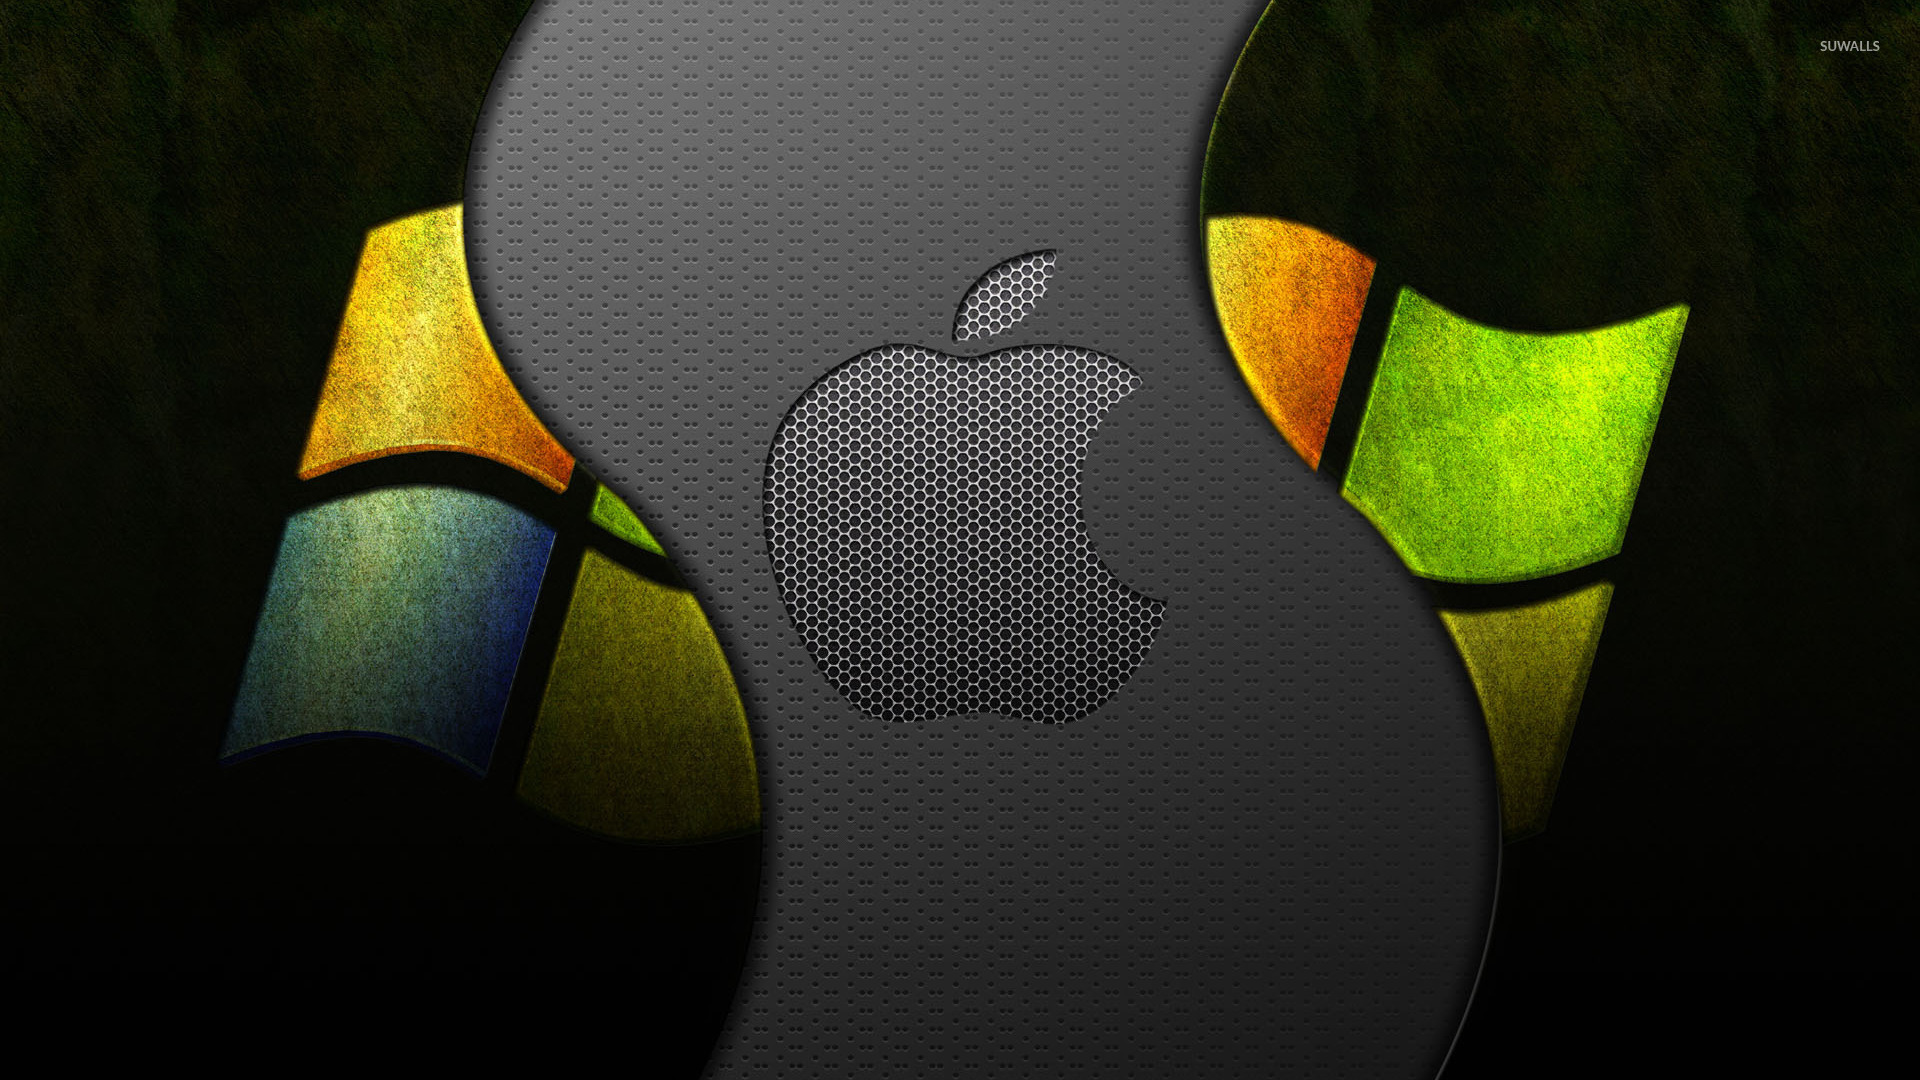 apple music download windows 11